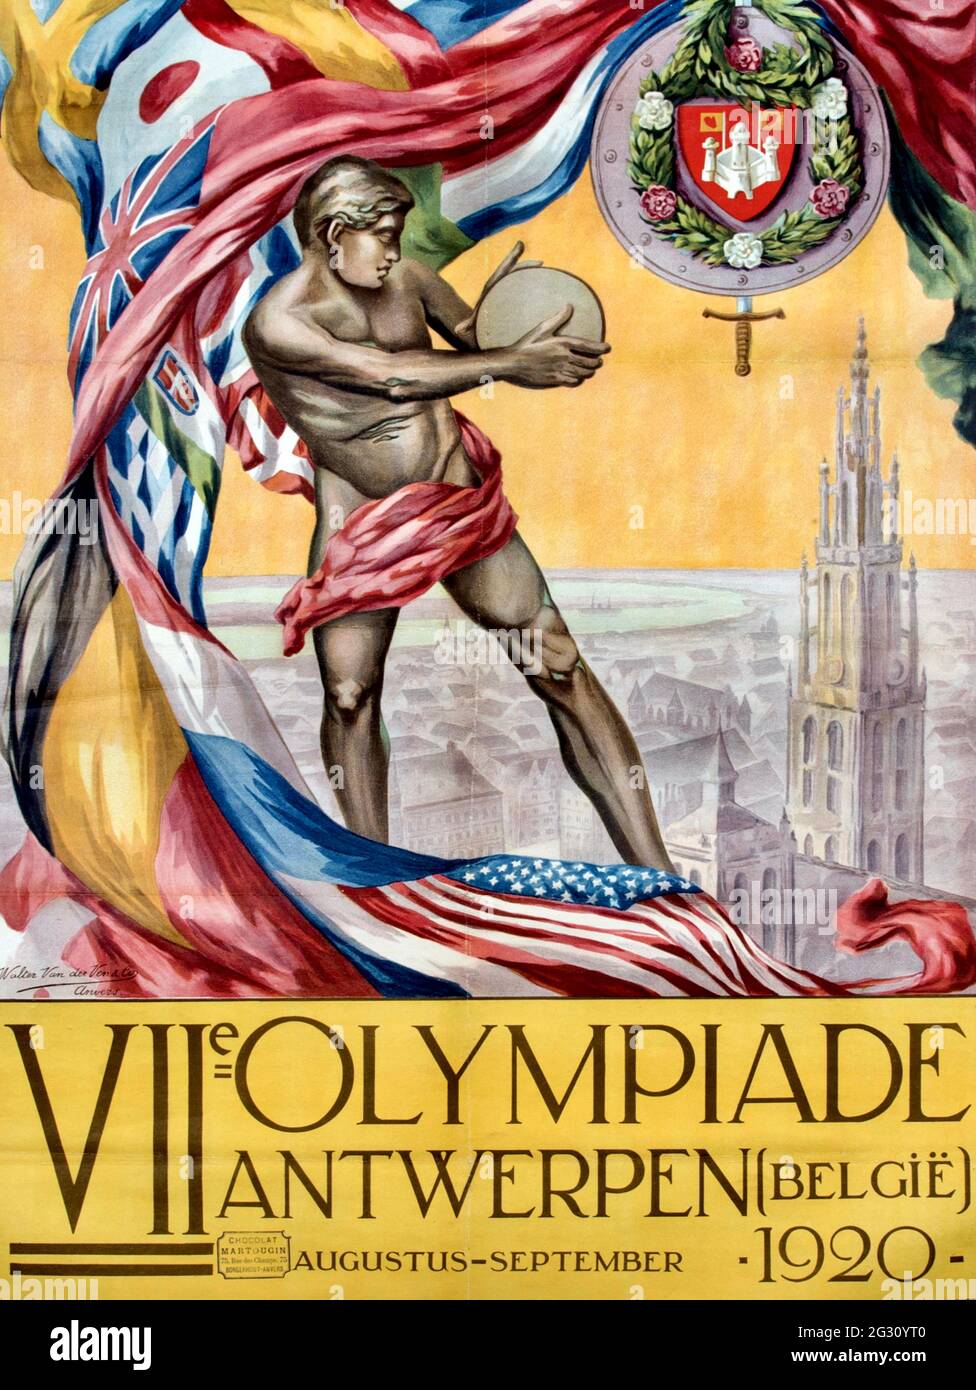 Anversa 1920 - Poster Olimpico d'epoca - Discus Thrower Foto Stock